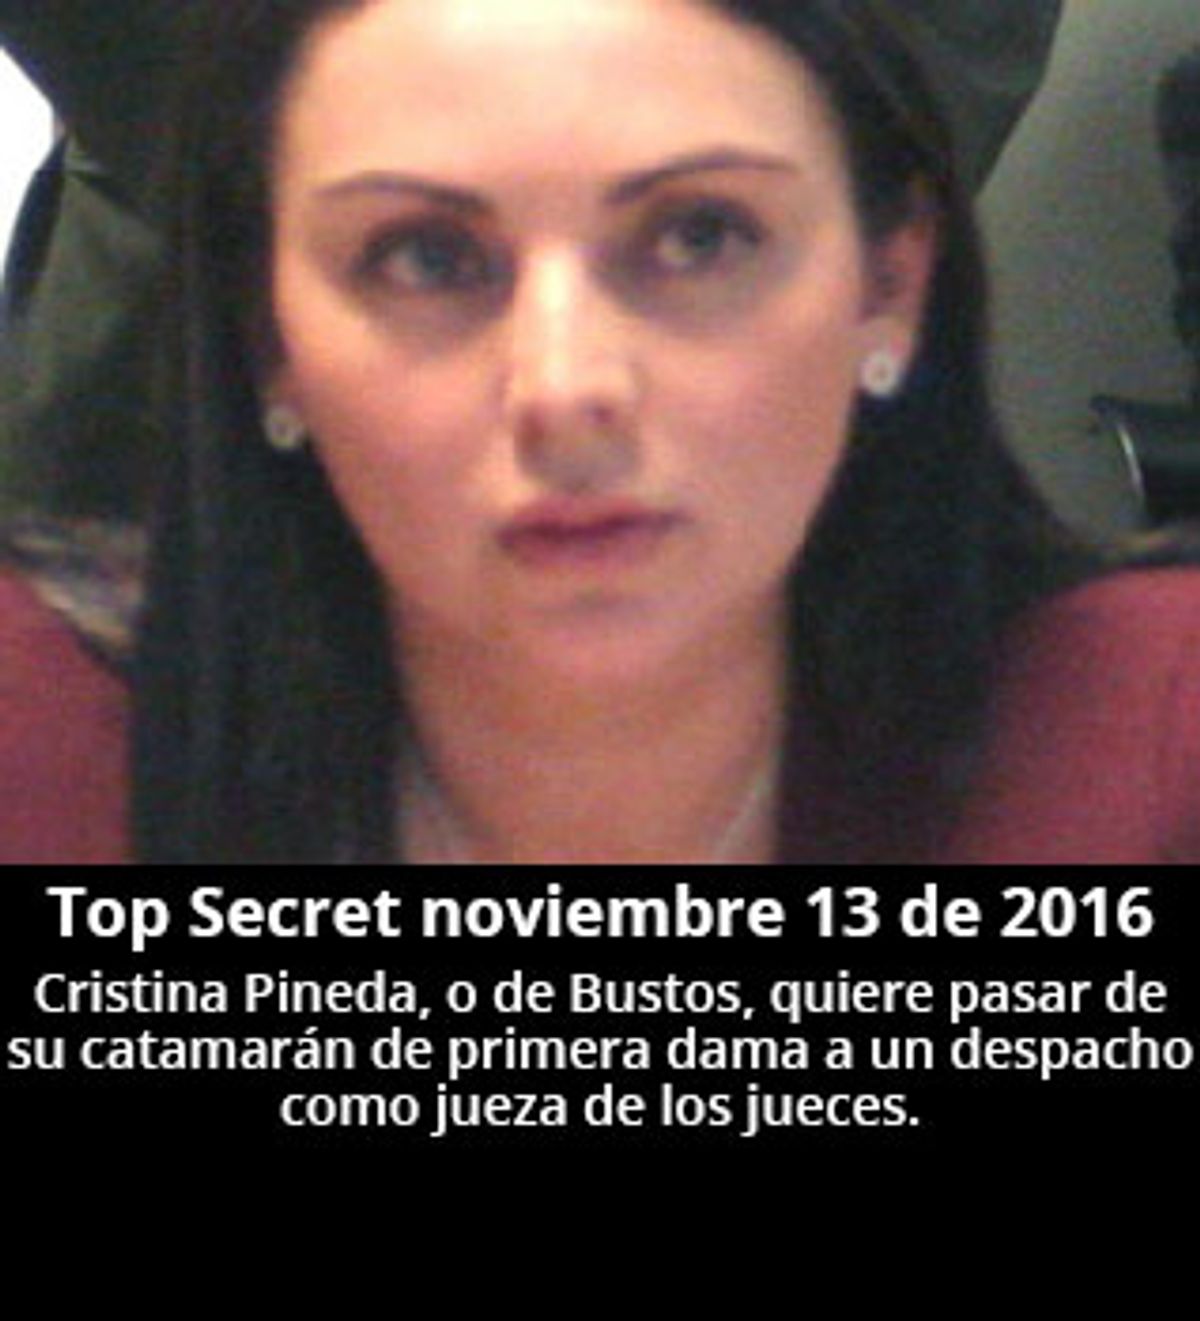 Top Secret noviembre 13 de 2016